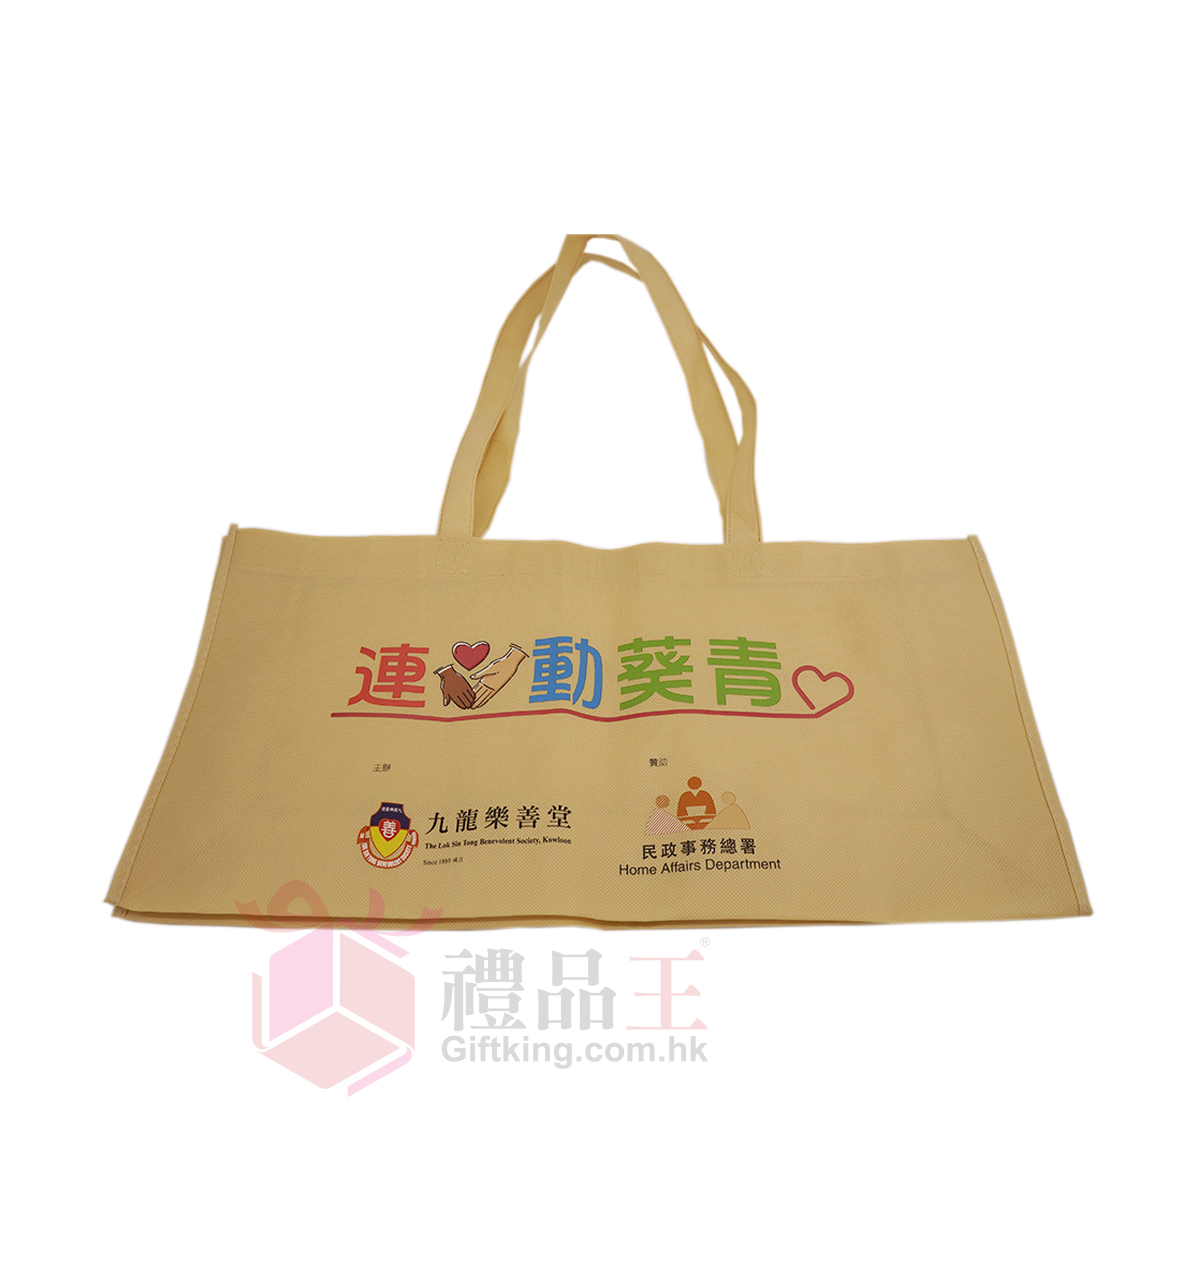 The Lok Sin Tong Benevolent Society,Kowloon Eco bag (Advertising Gift)